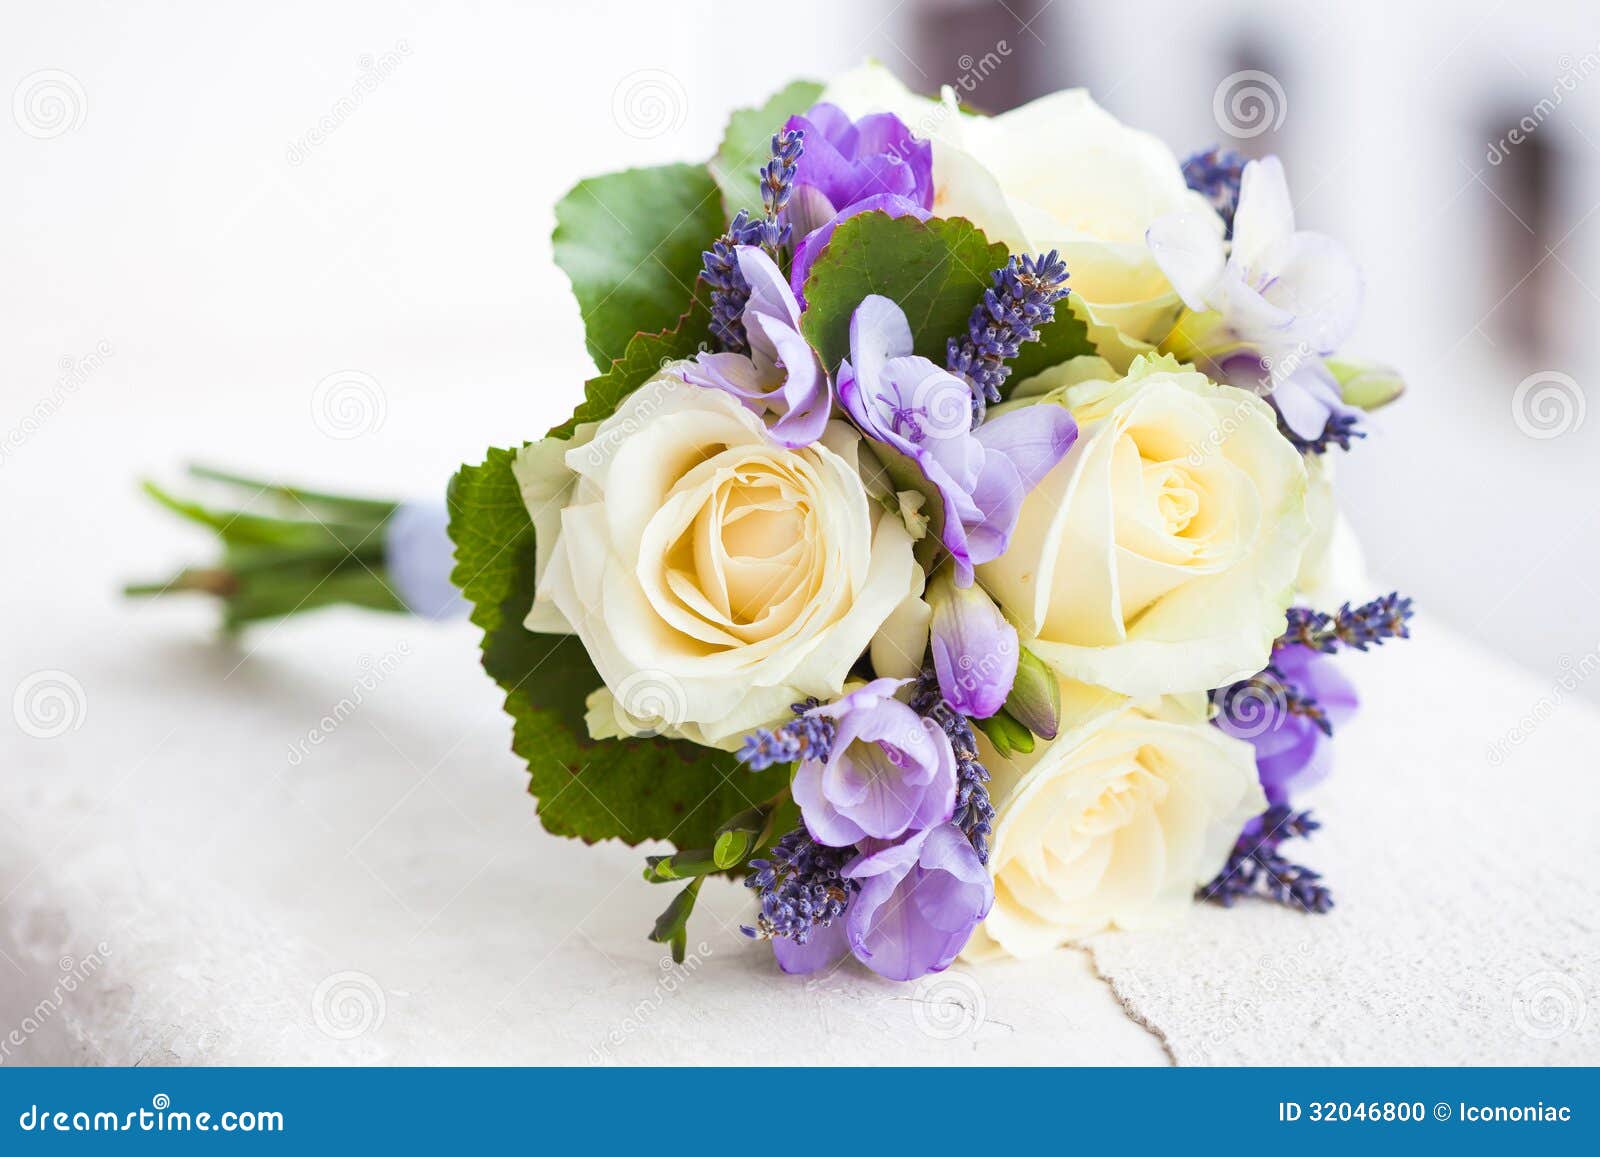 Wedding flowers lavender roses